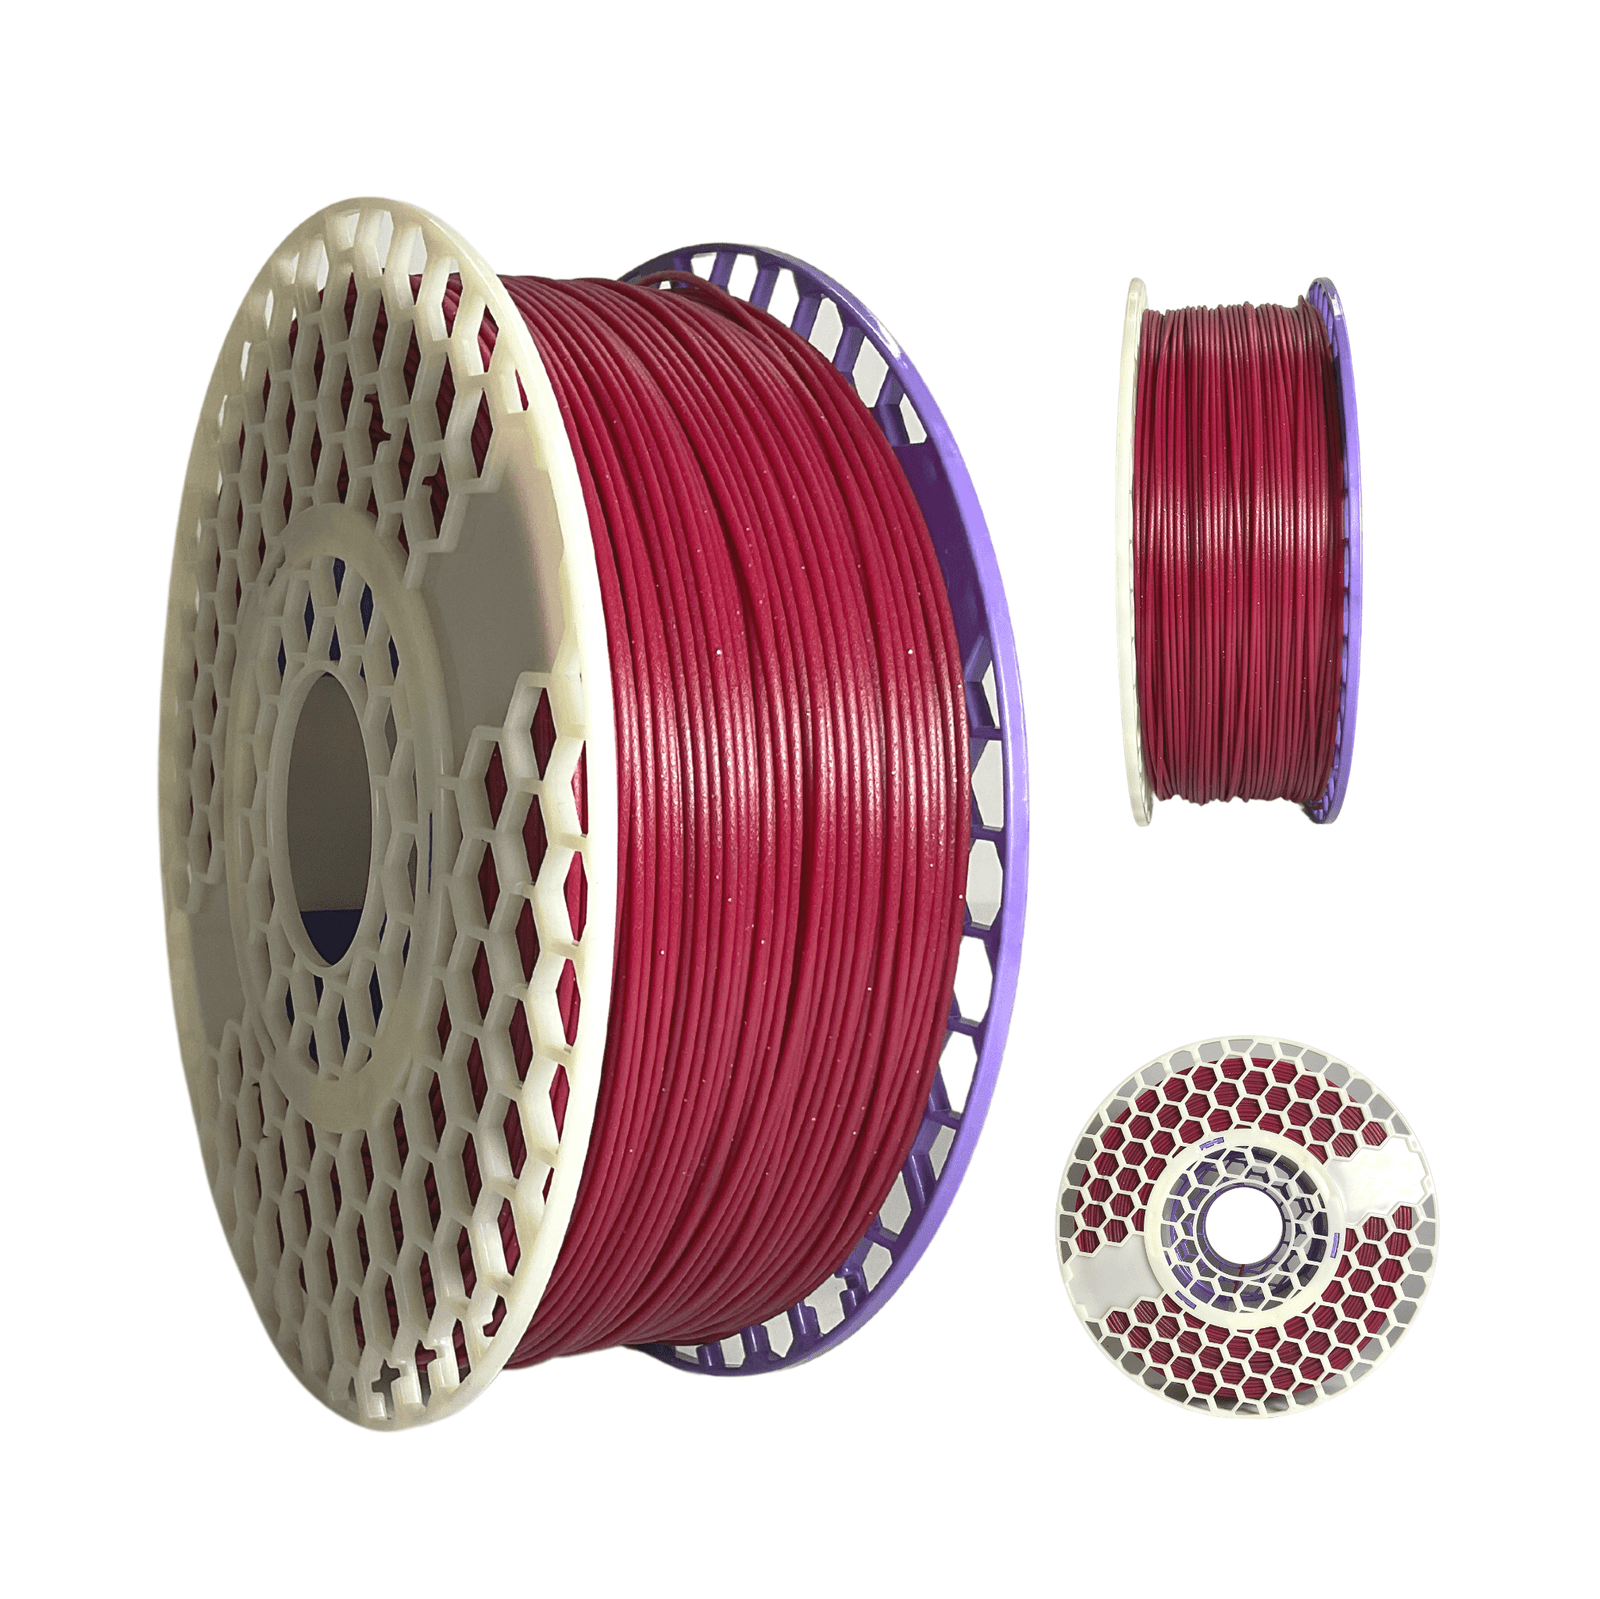 Filamento PLA 1.75 mm Color Rojo Frutal sin aditivos Fill-3d